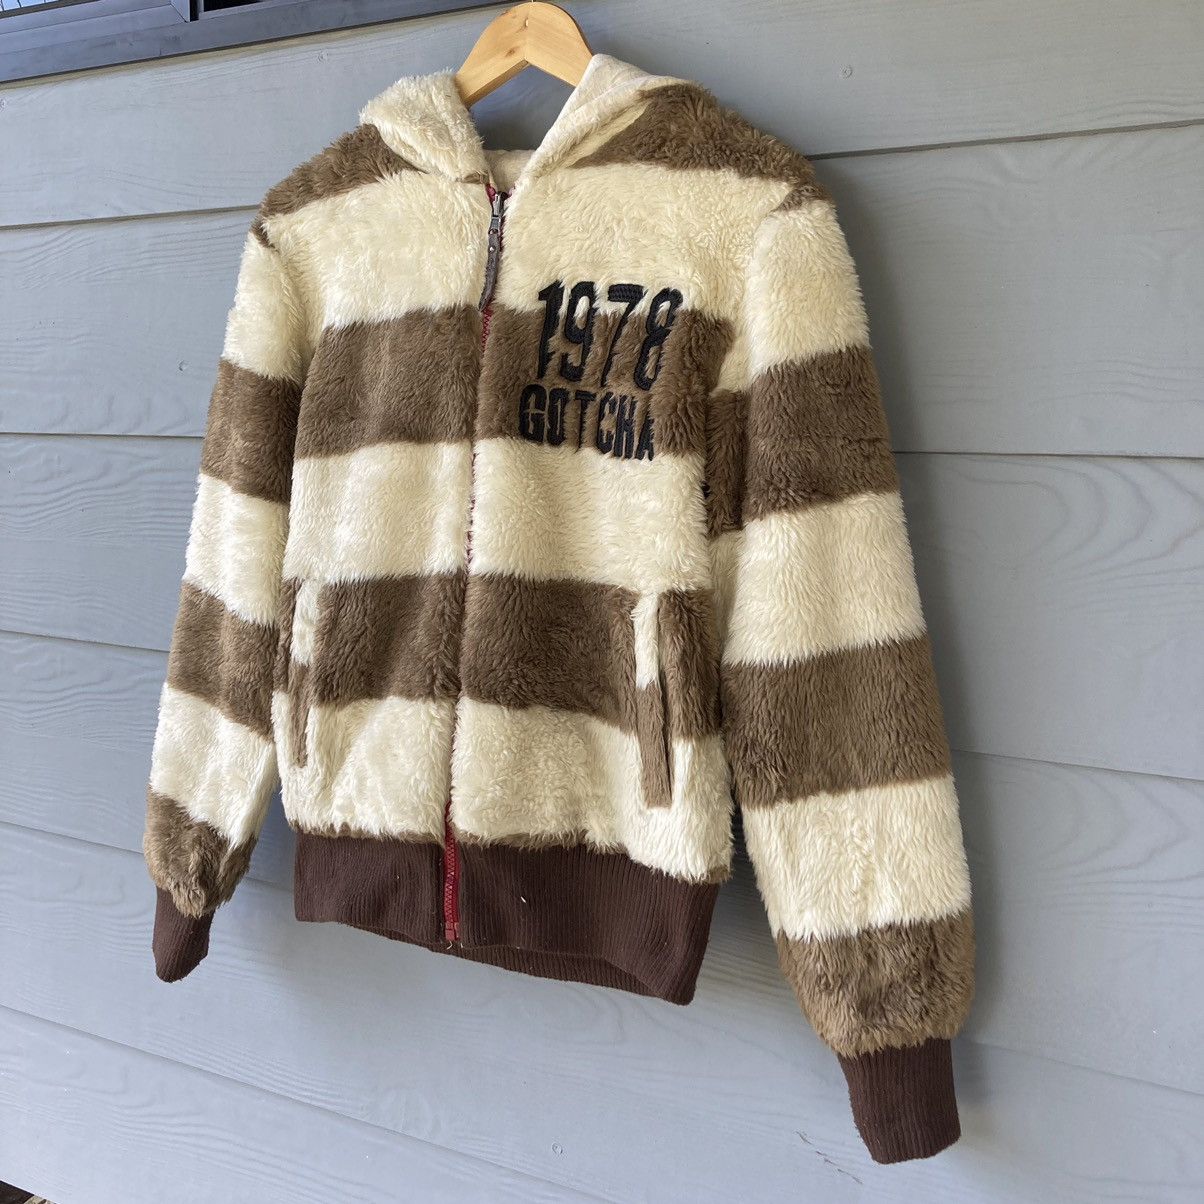 Outdoor Life - Vintage Gotcha Fleece Sweatshirt - 3